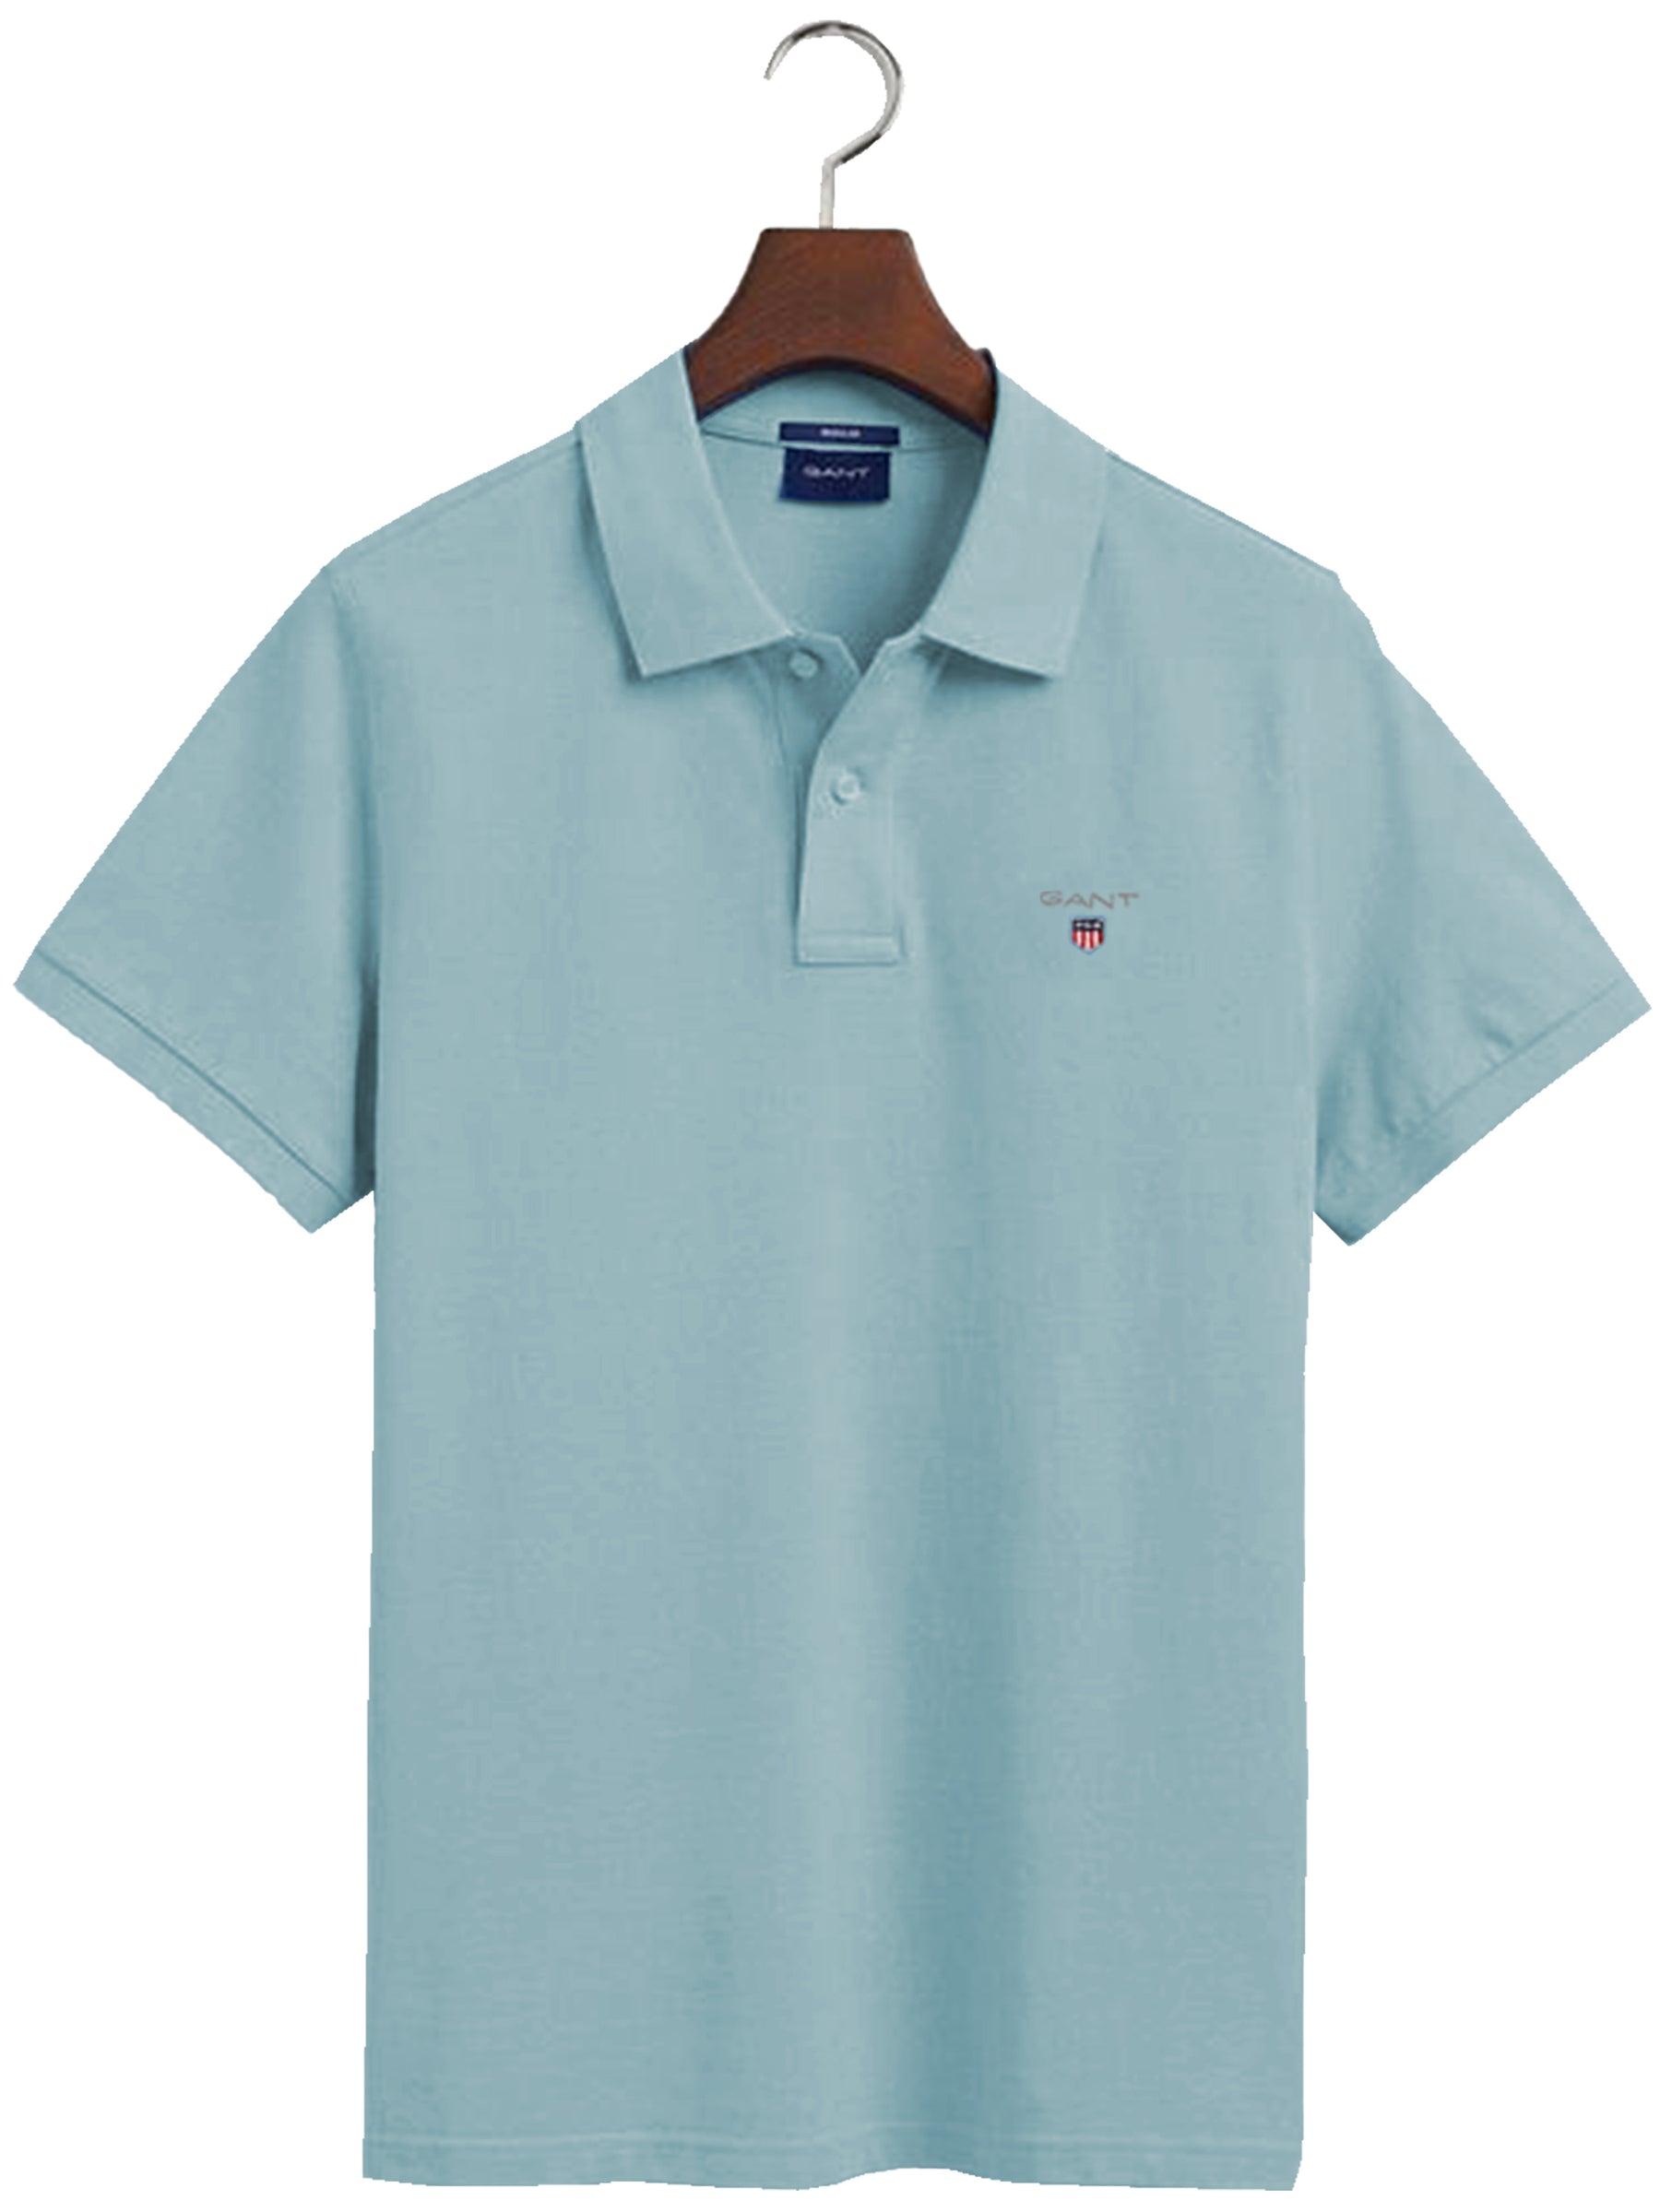 GANT_POLO_ORIG CAP-BLU Gant | Mens Original Pique Polo Shirt GANT RAWDENIM